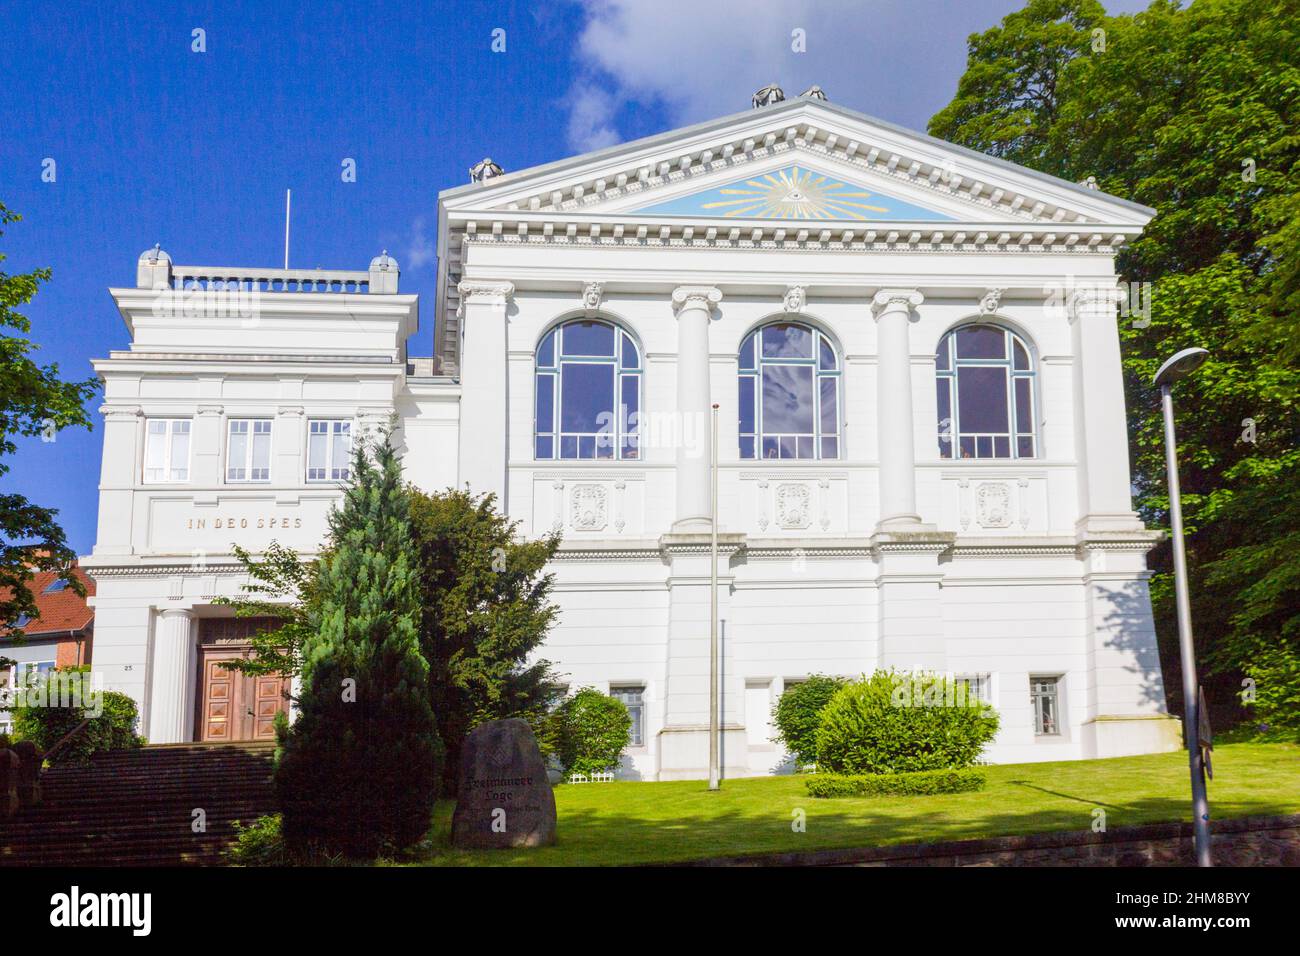 Historic Freemason's Hall in Flensburg, Germany Stock Photo